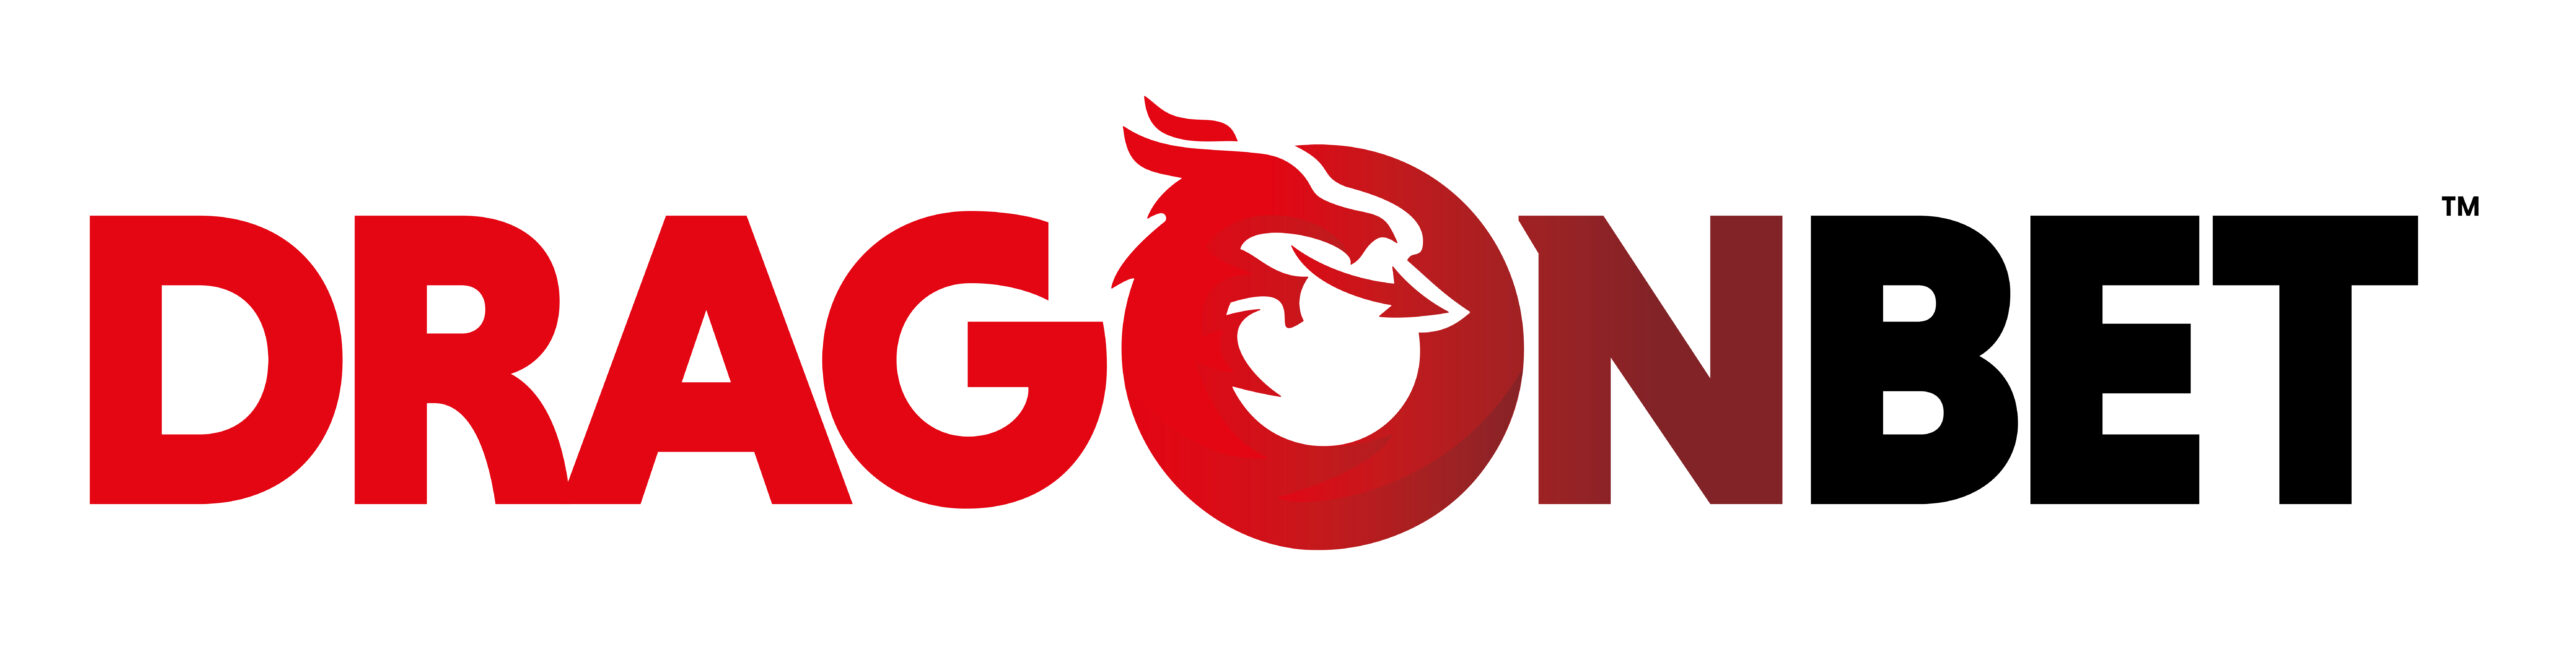 Dragon-Bet-Logo-Landscape-WEB-scaled.jpg